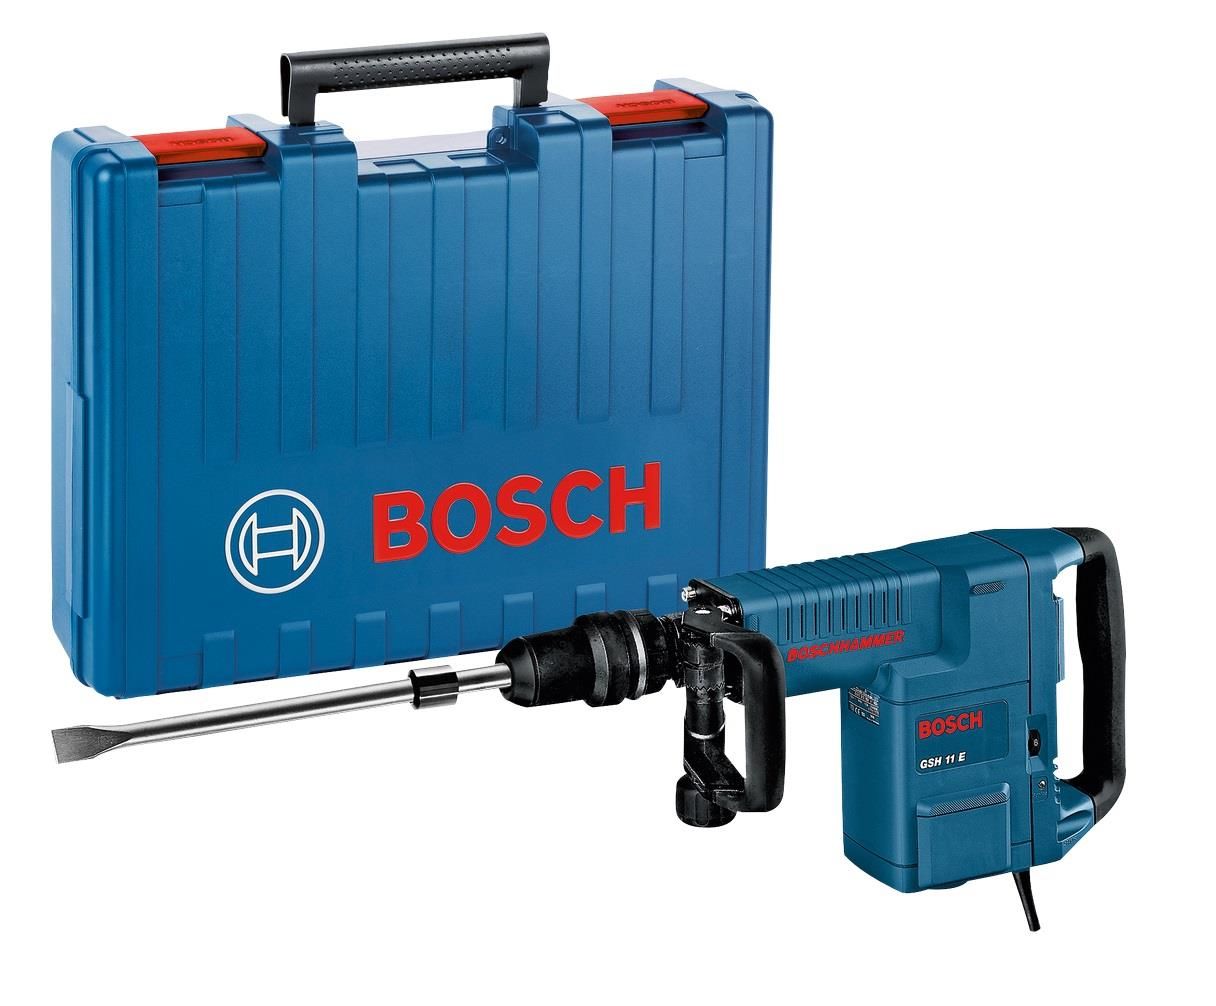 Bosch GSH 11 E Beton Kırıcı Hilti Matkap 1500 W 0611316703